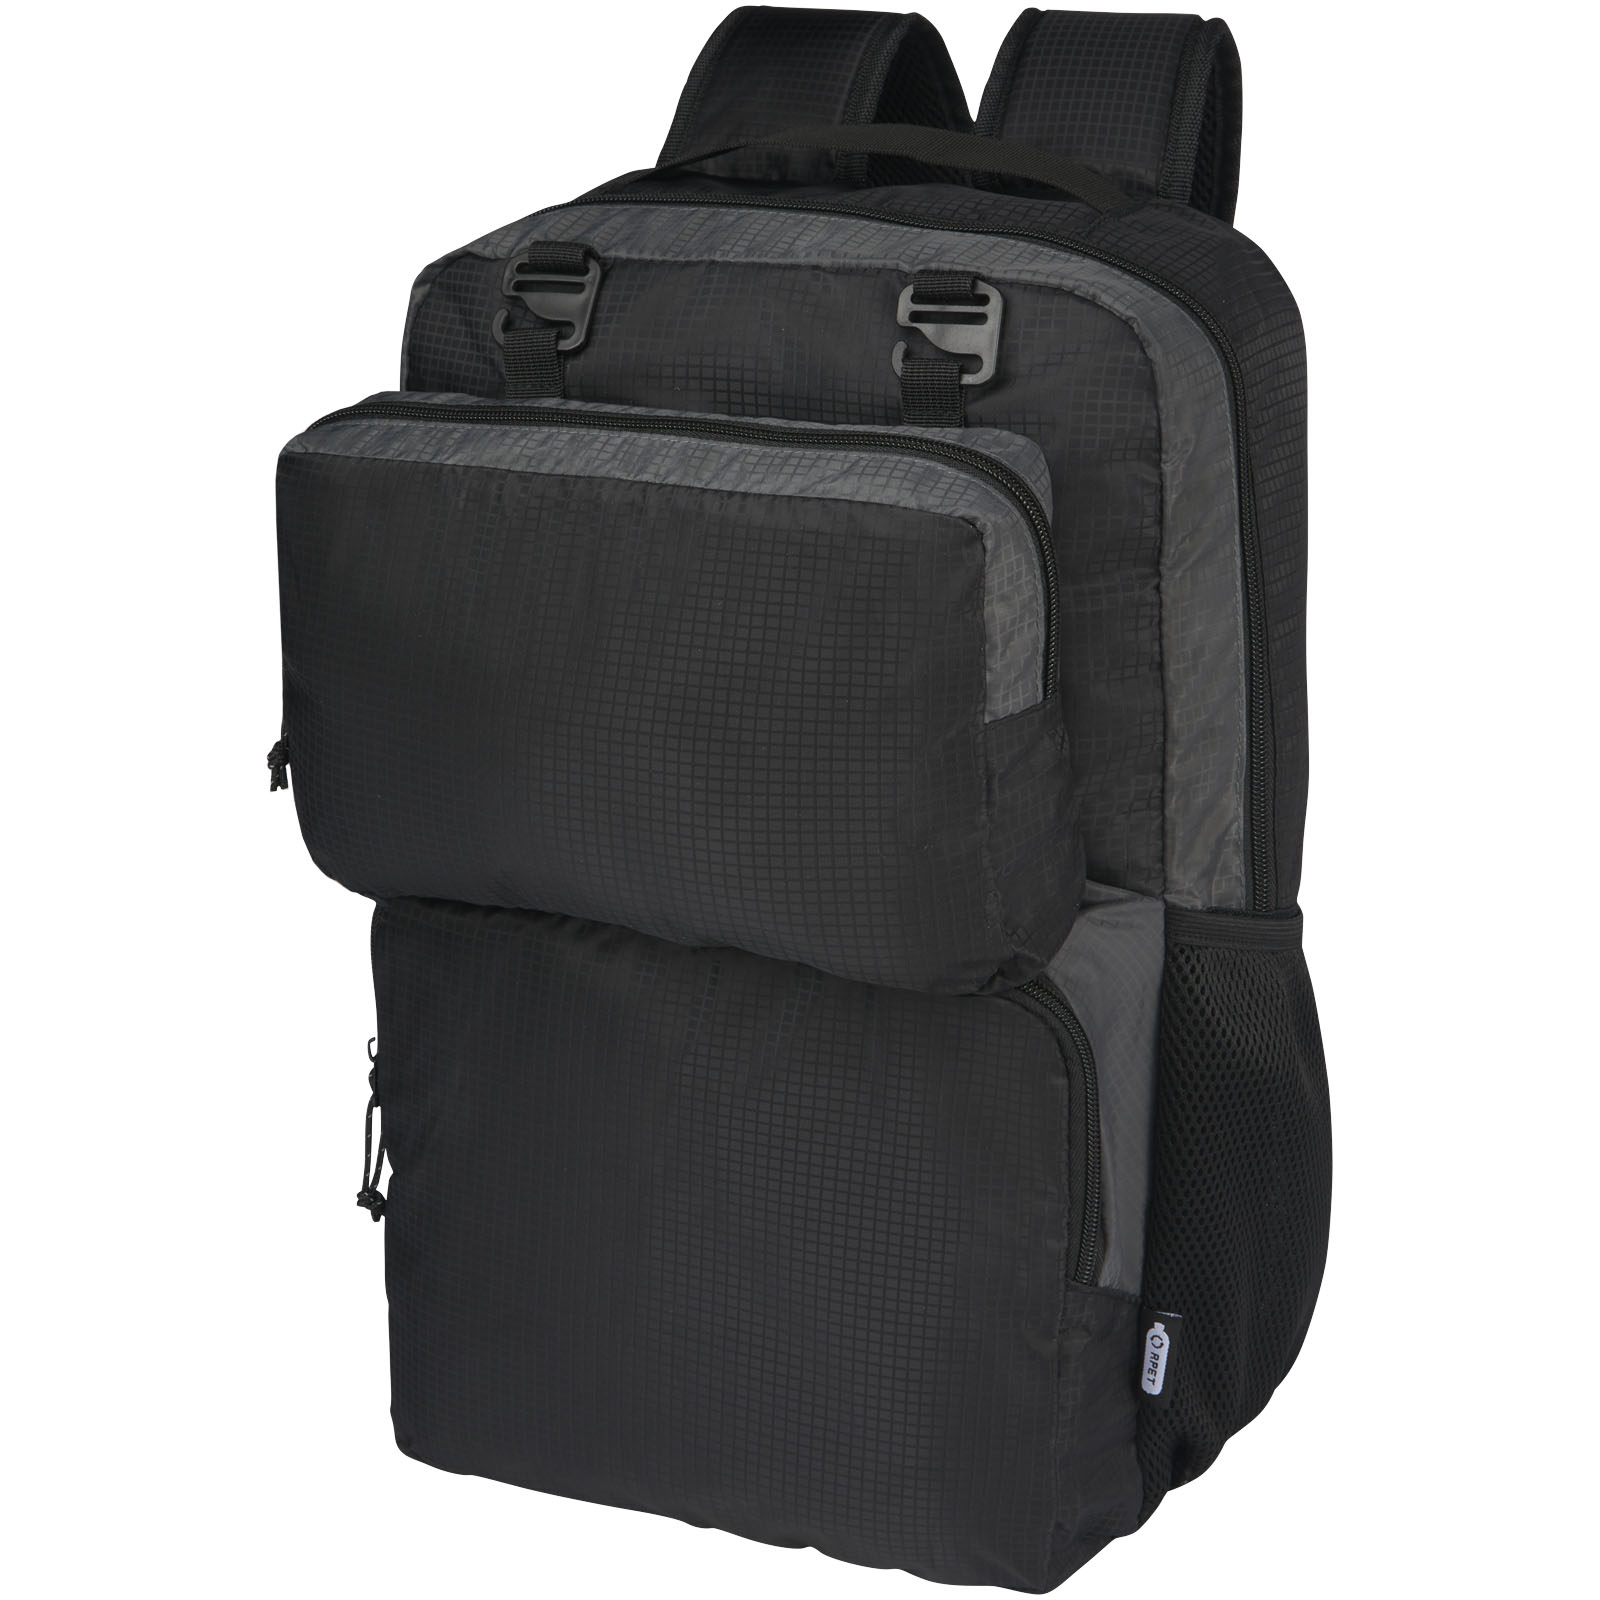 Laptop backpack SHOOK made of recycled material, 14 l - solid black / gun metal